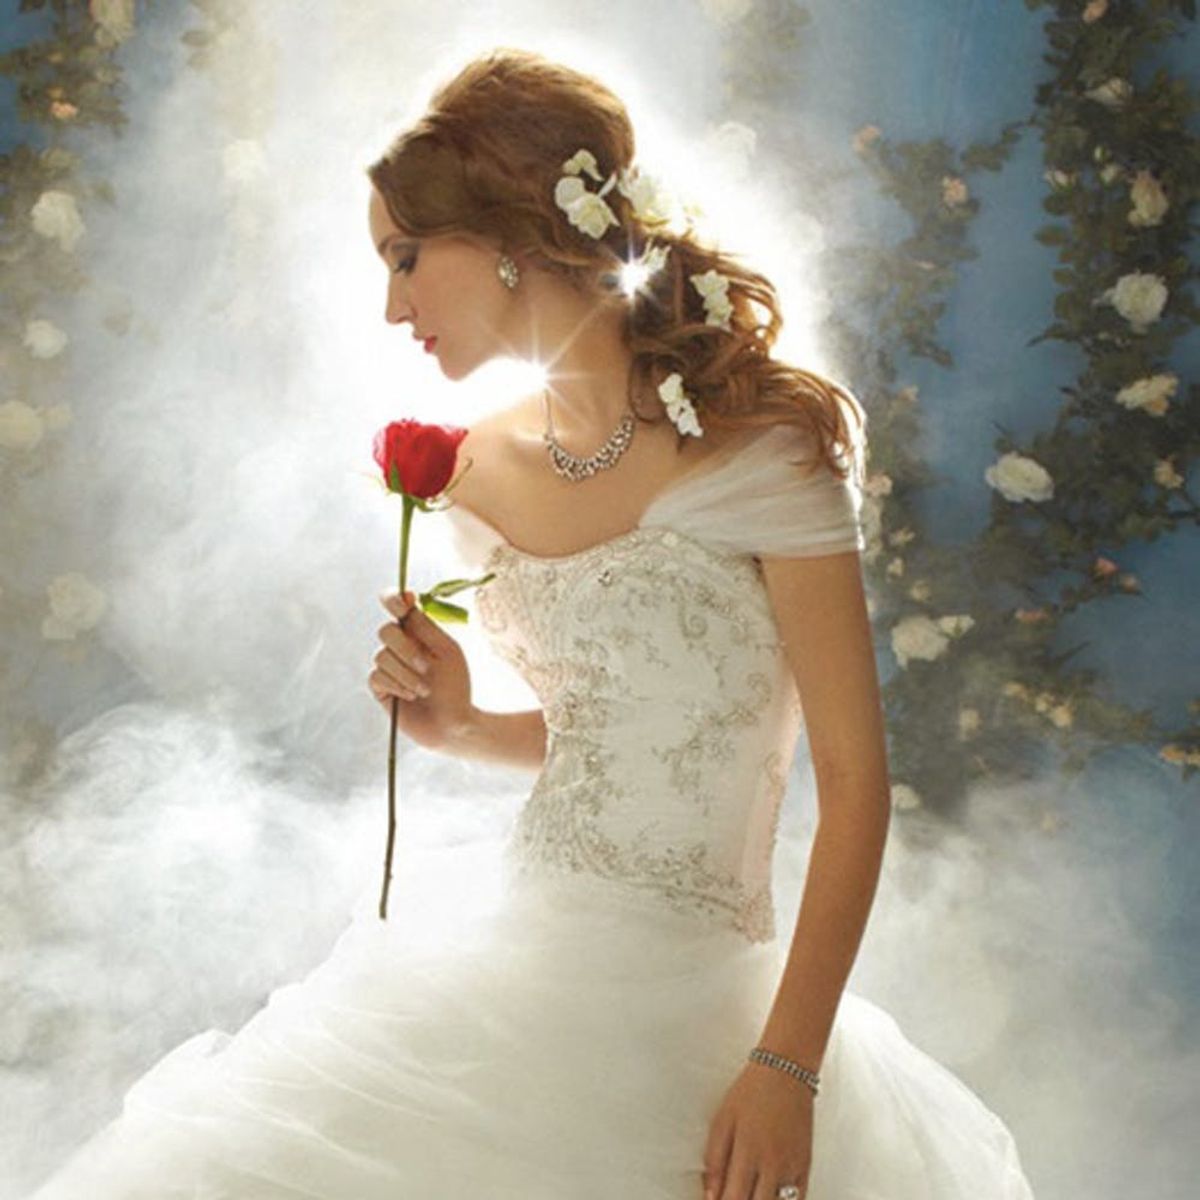 Disney Princess Weddings IRL: 14 Enchanting Belle-Inspired Ideas